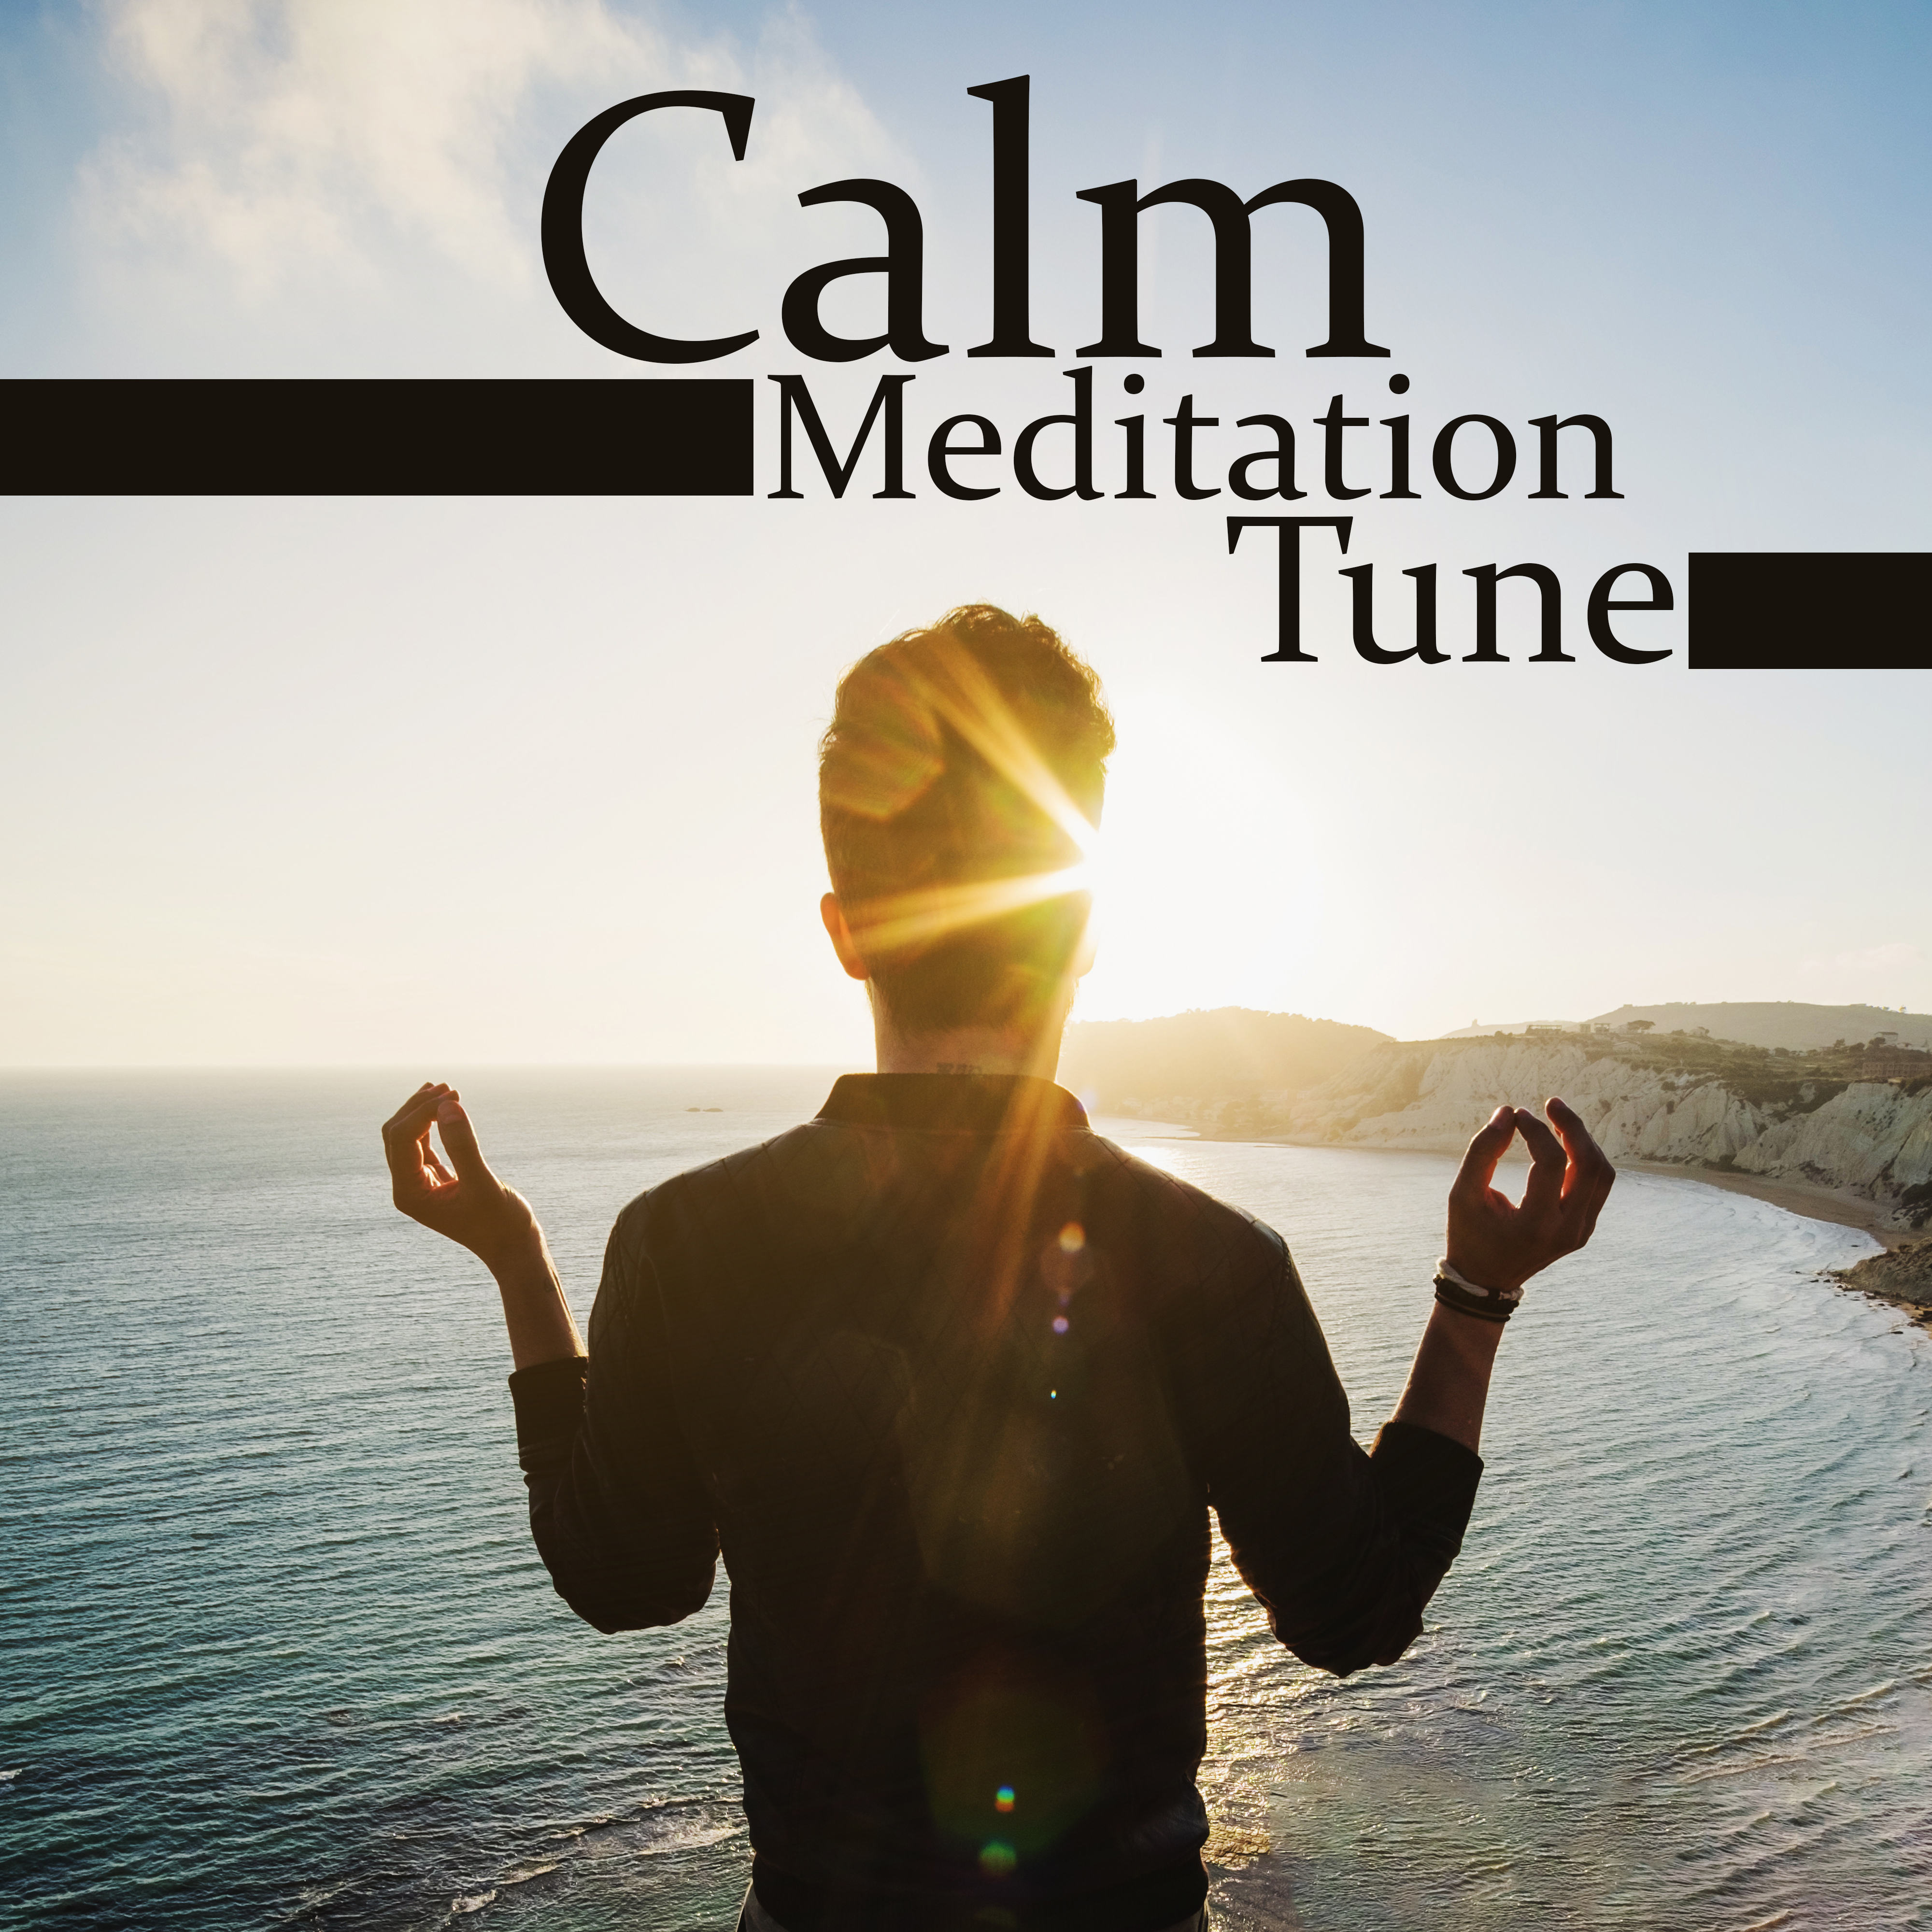 Calm Meditation Tune